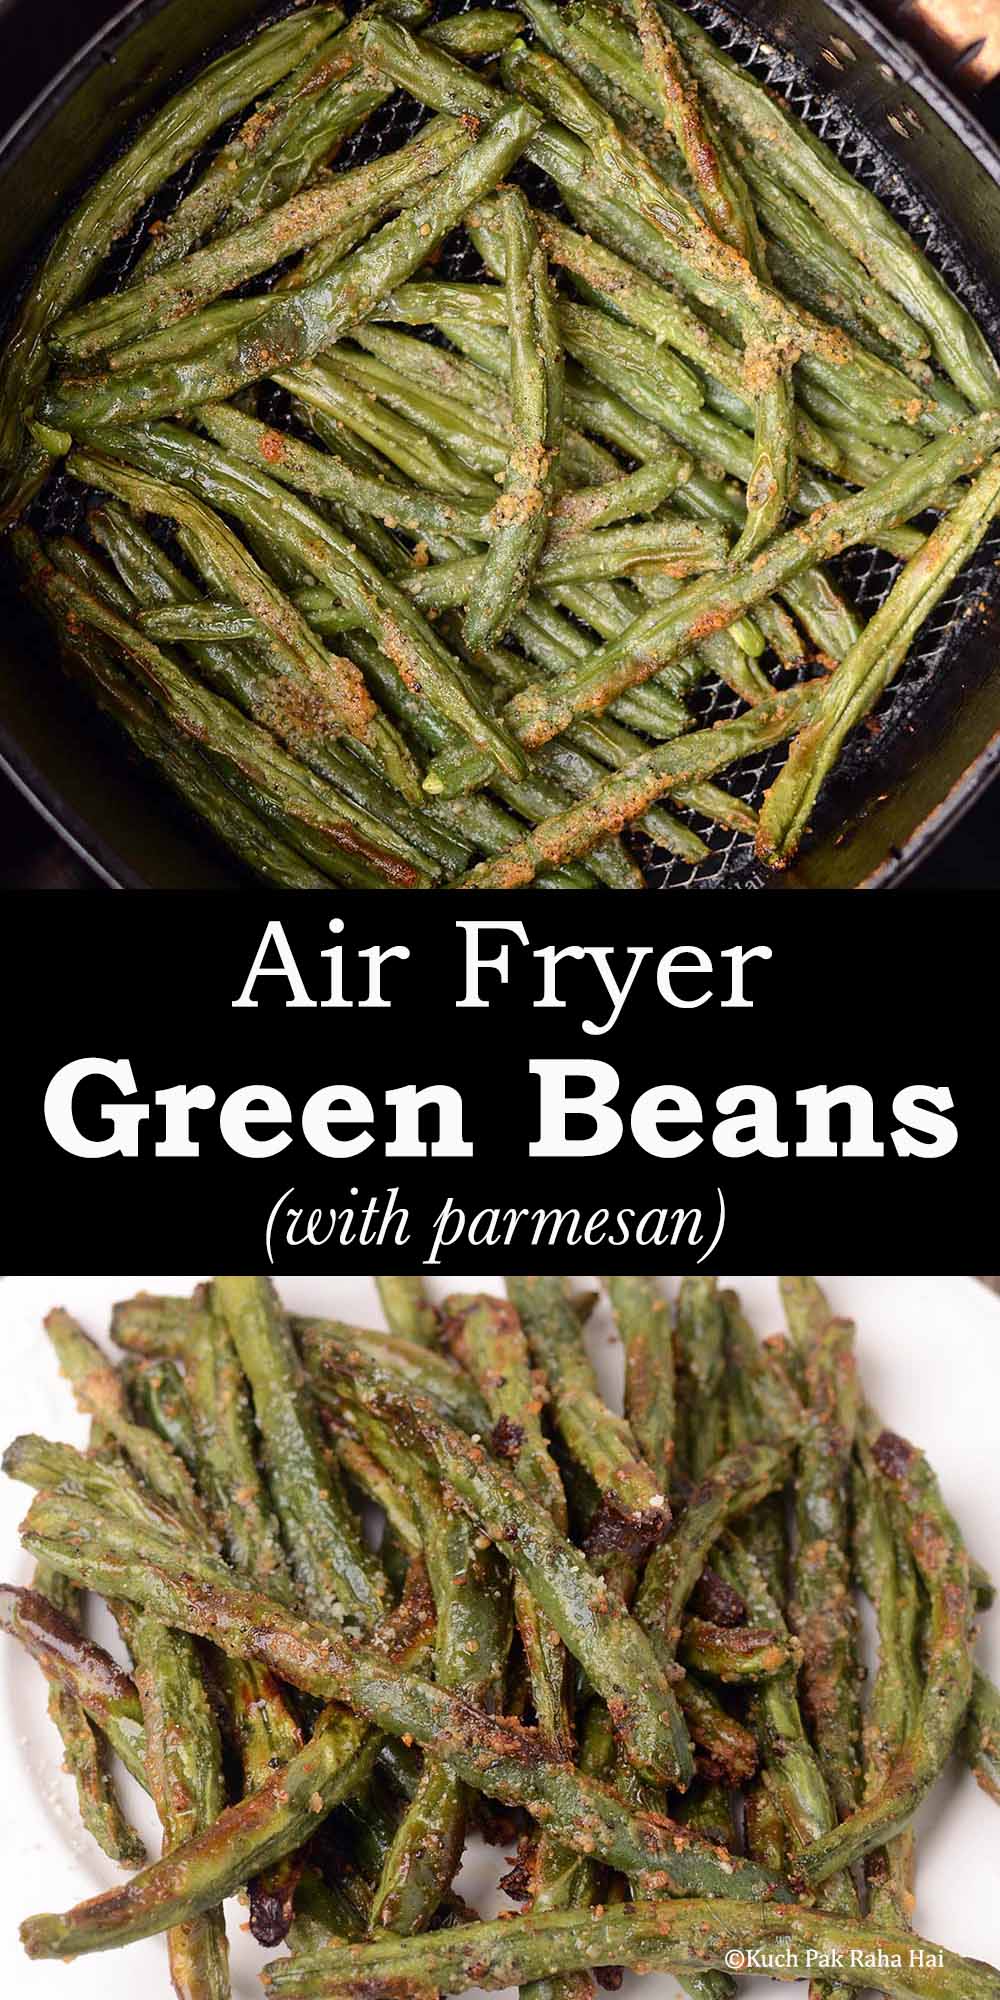 Air fryer garlic green beans with parmesan.